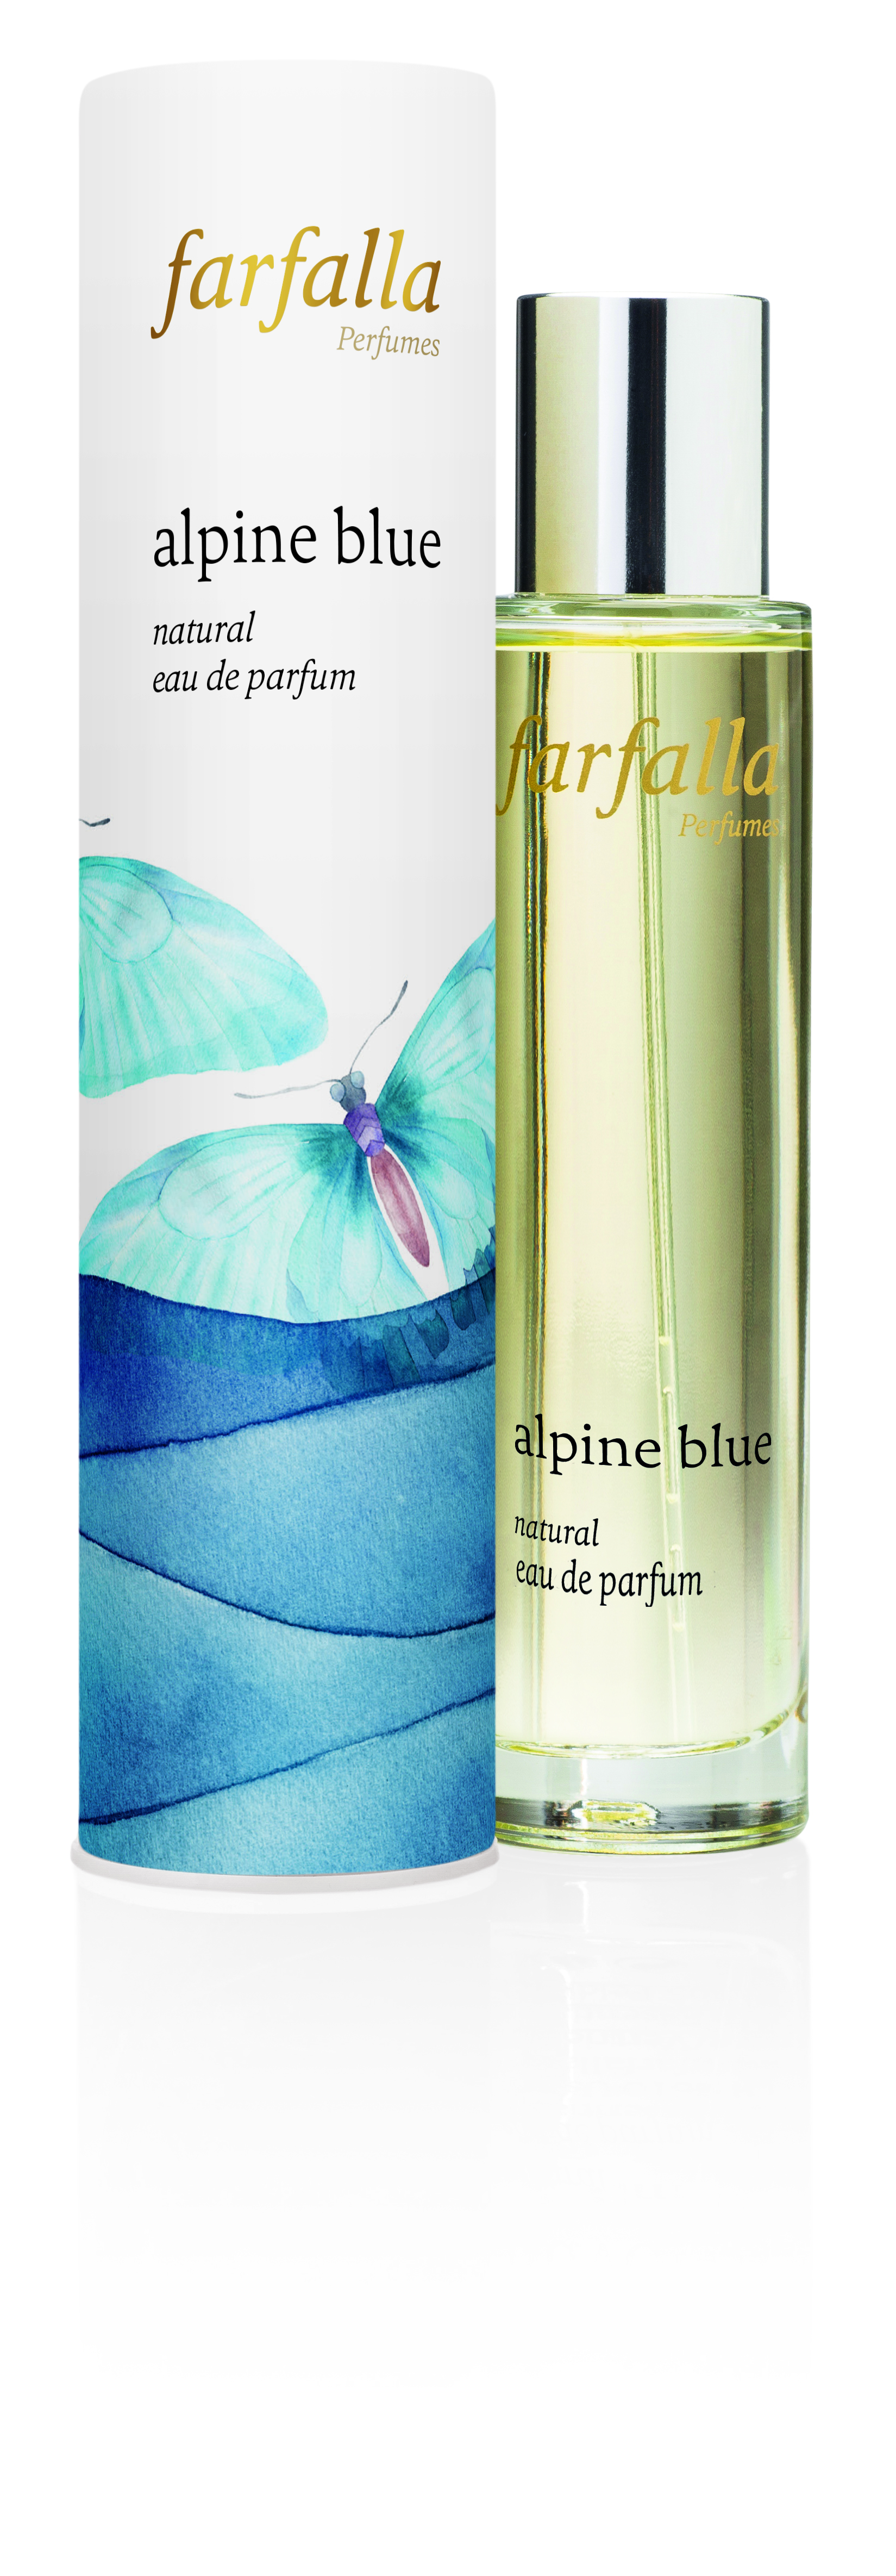 Farfalla alpine blue Natural Eau de Parfum 50ml